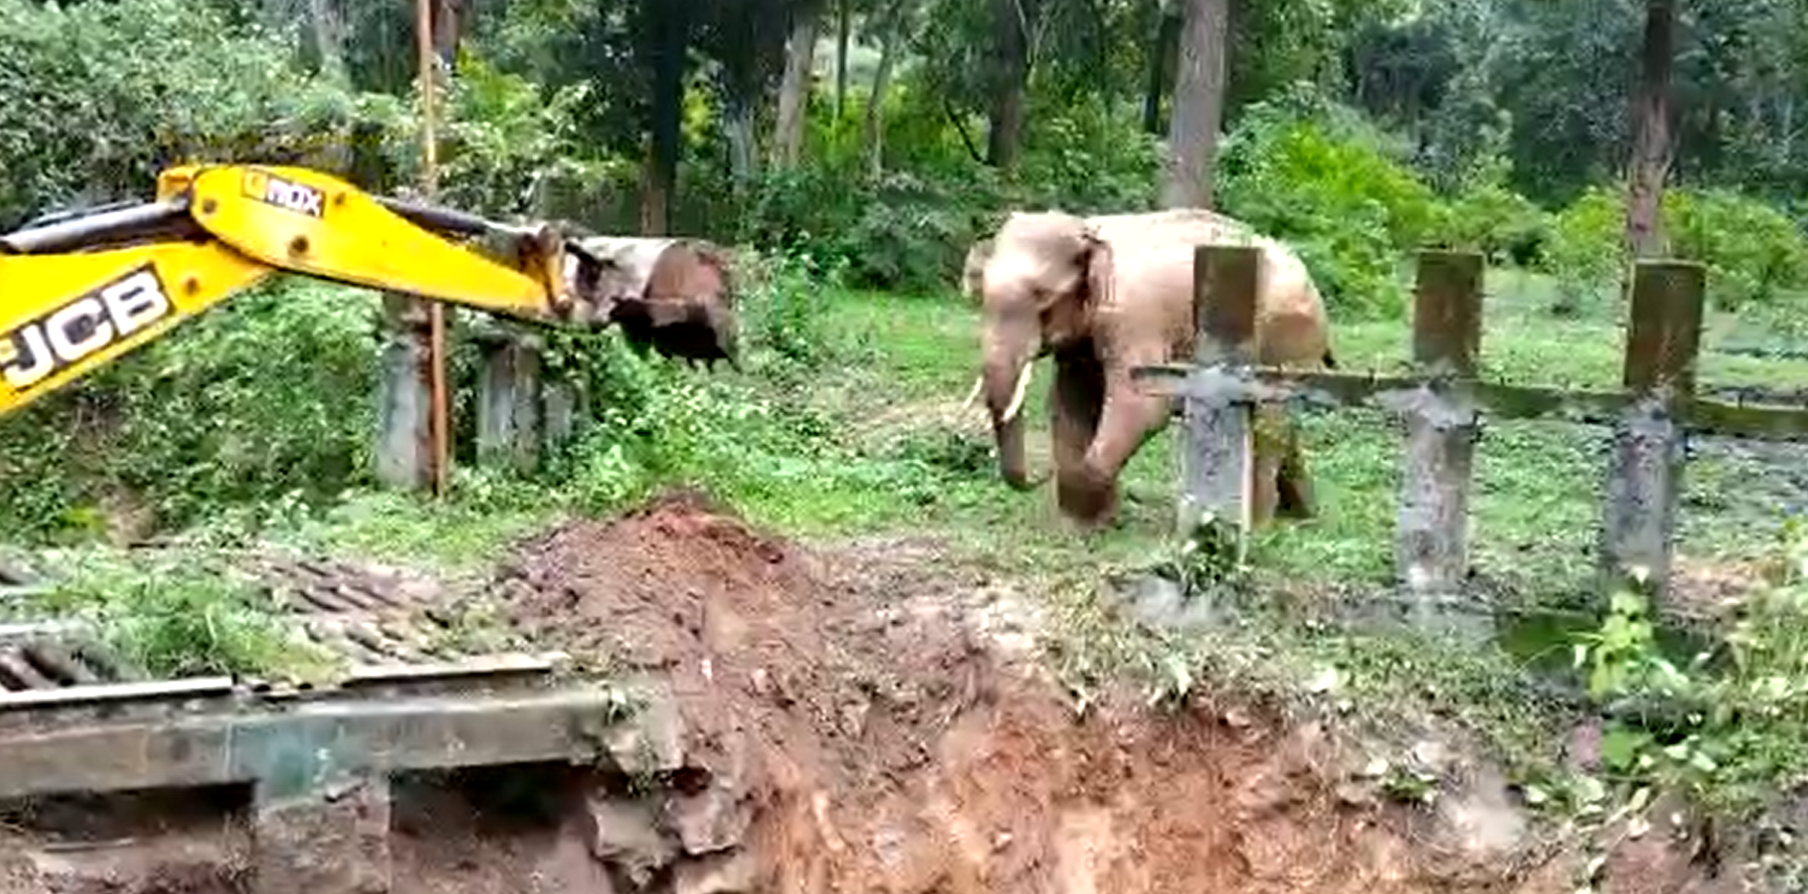 Baby elephant facing the arm of the crane. │Source: twitter.com/SudhaRamenIFS